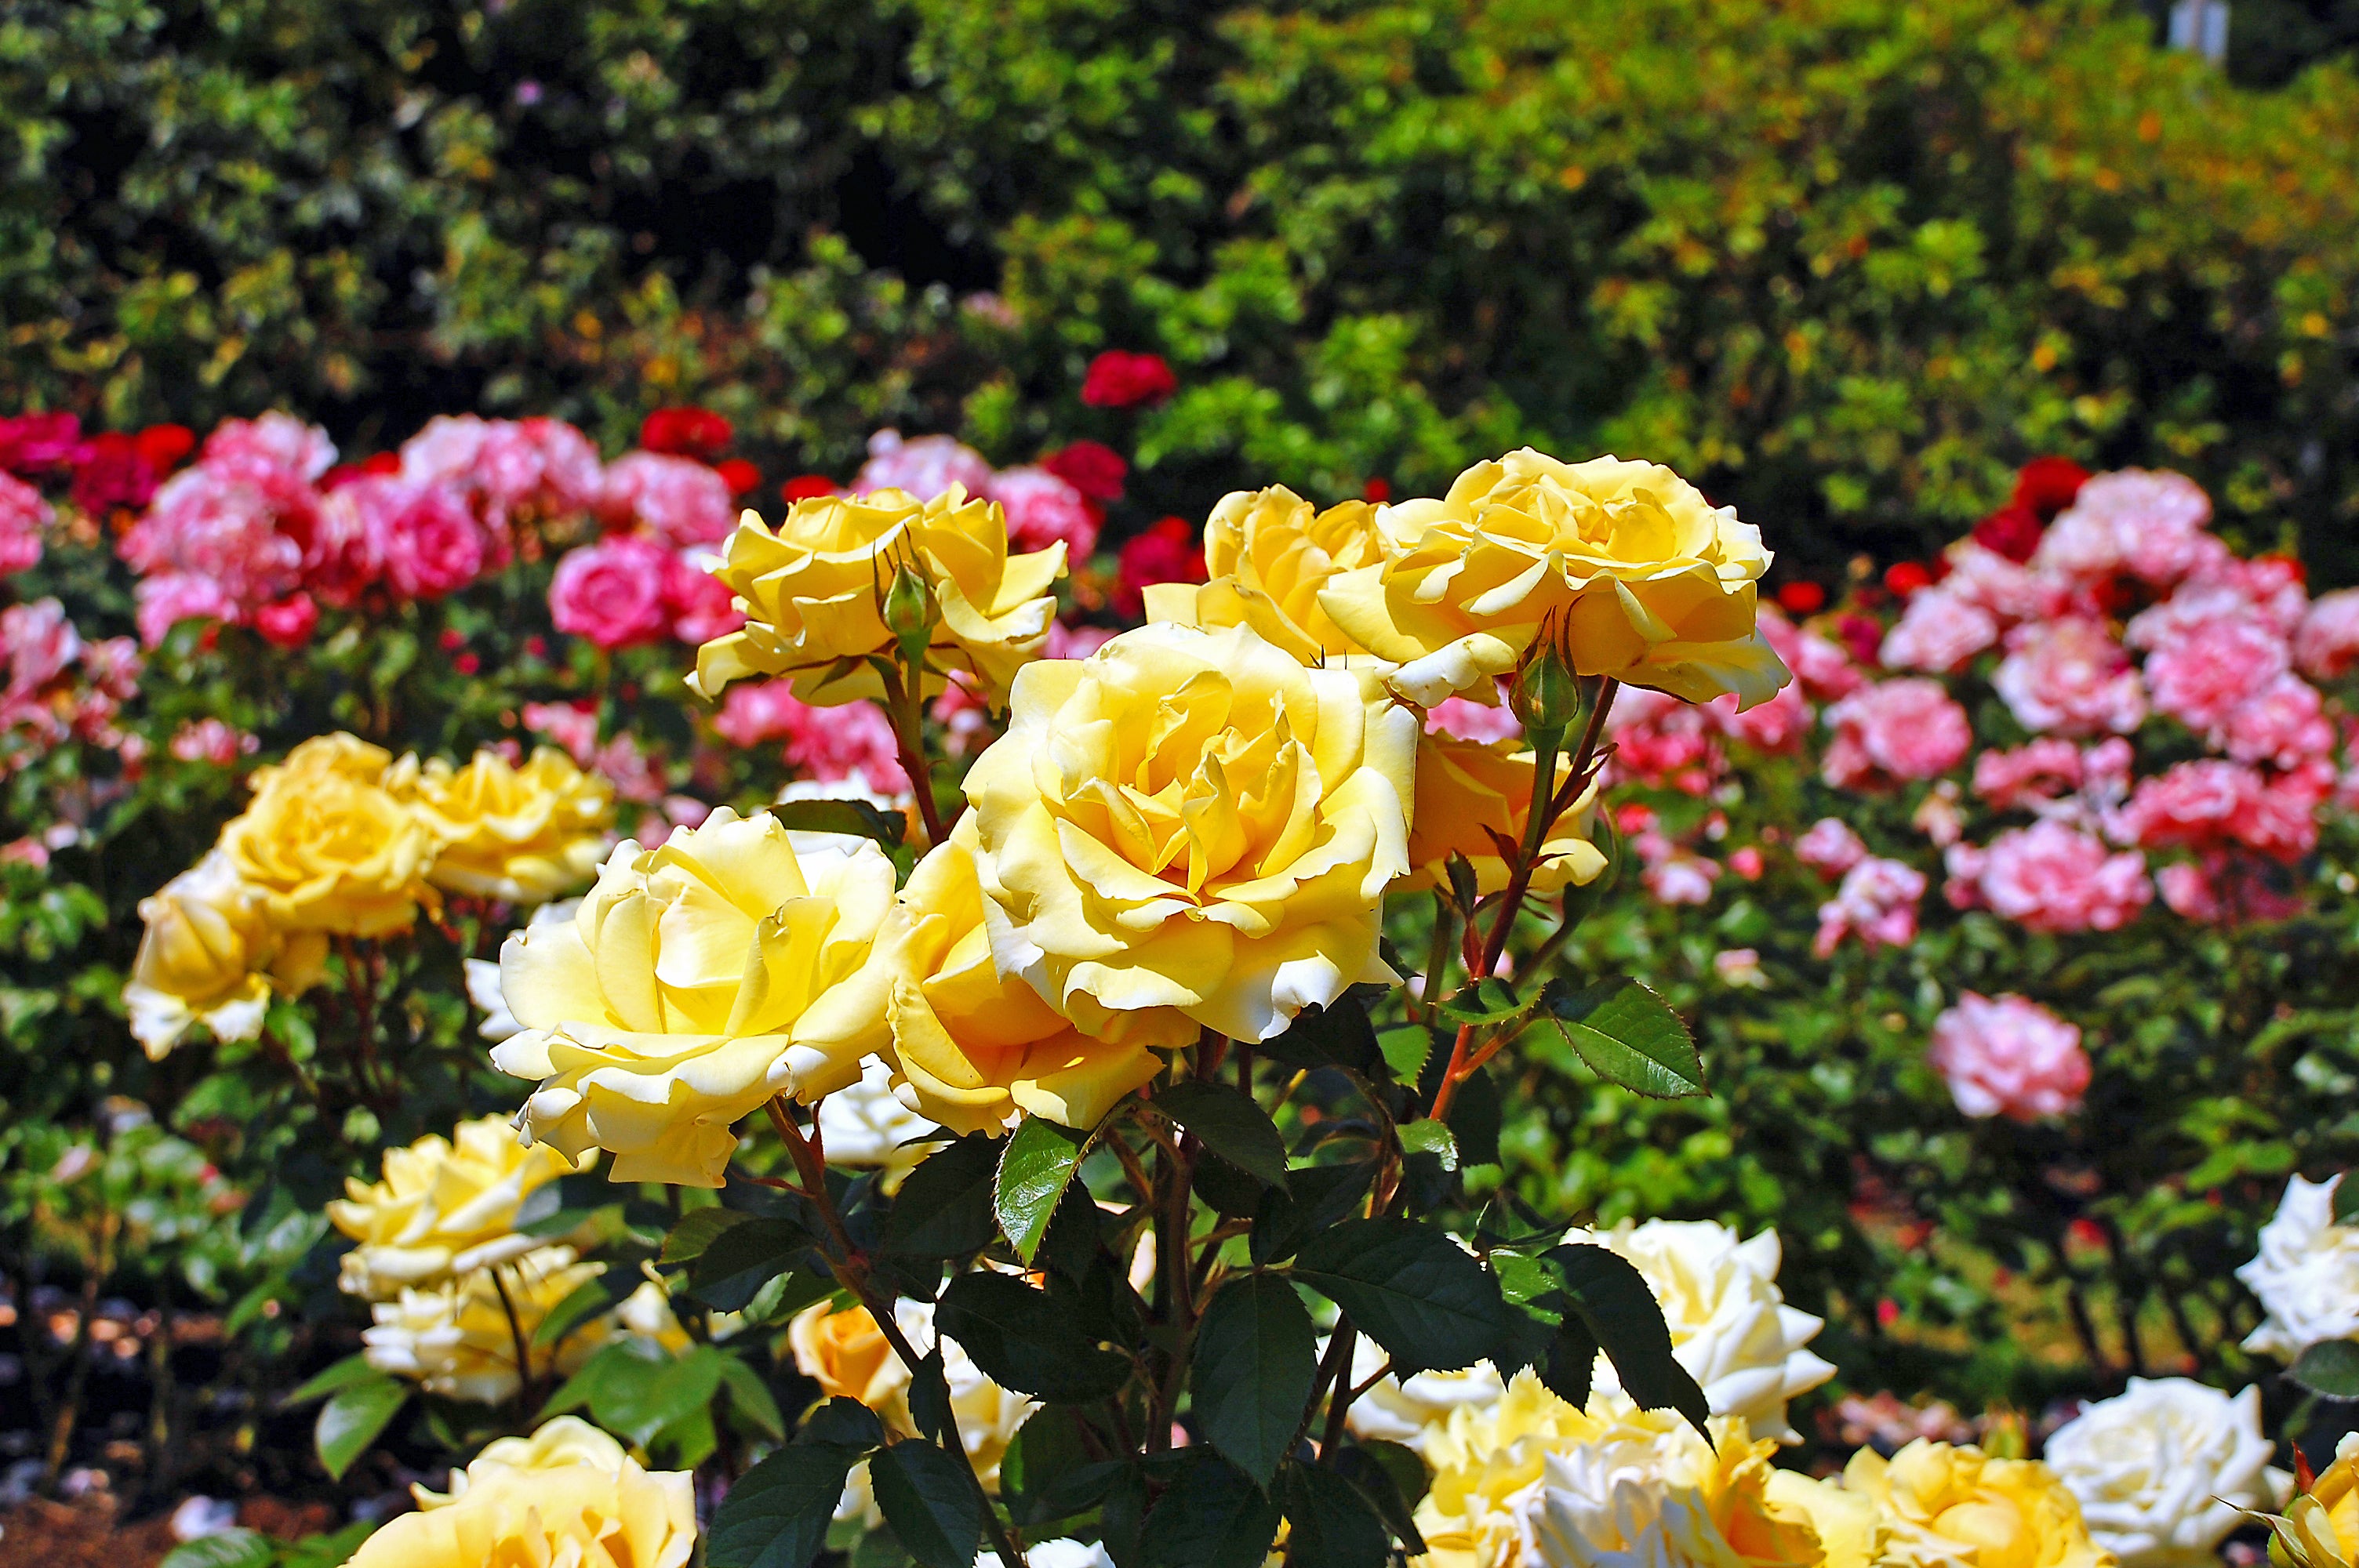 Roses need plenty of companion plants to thrive